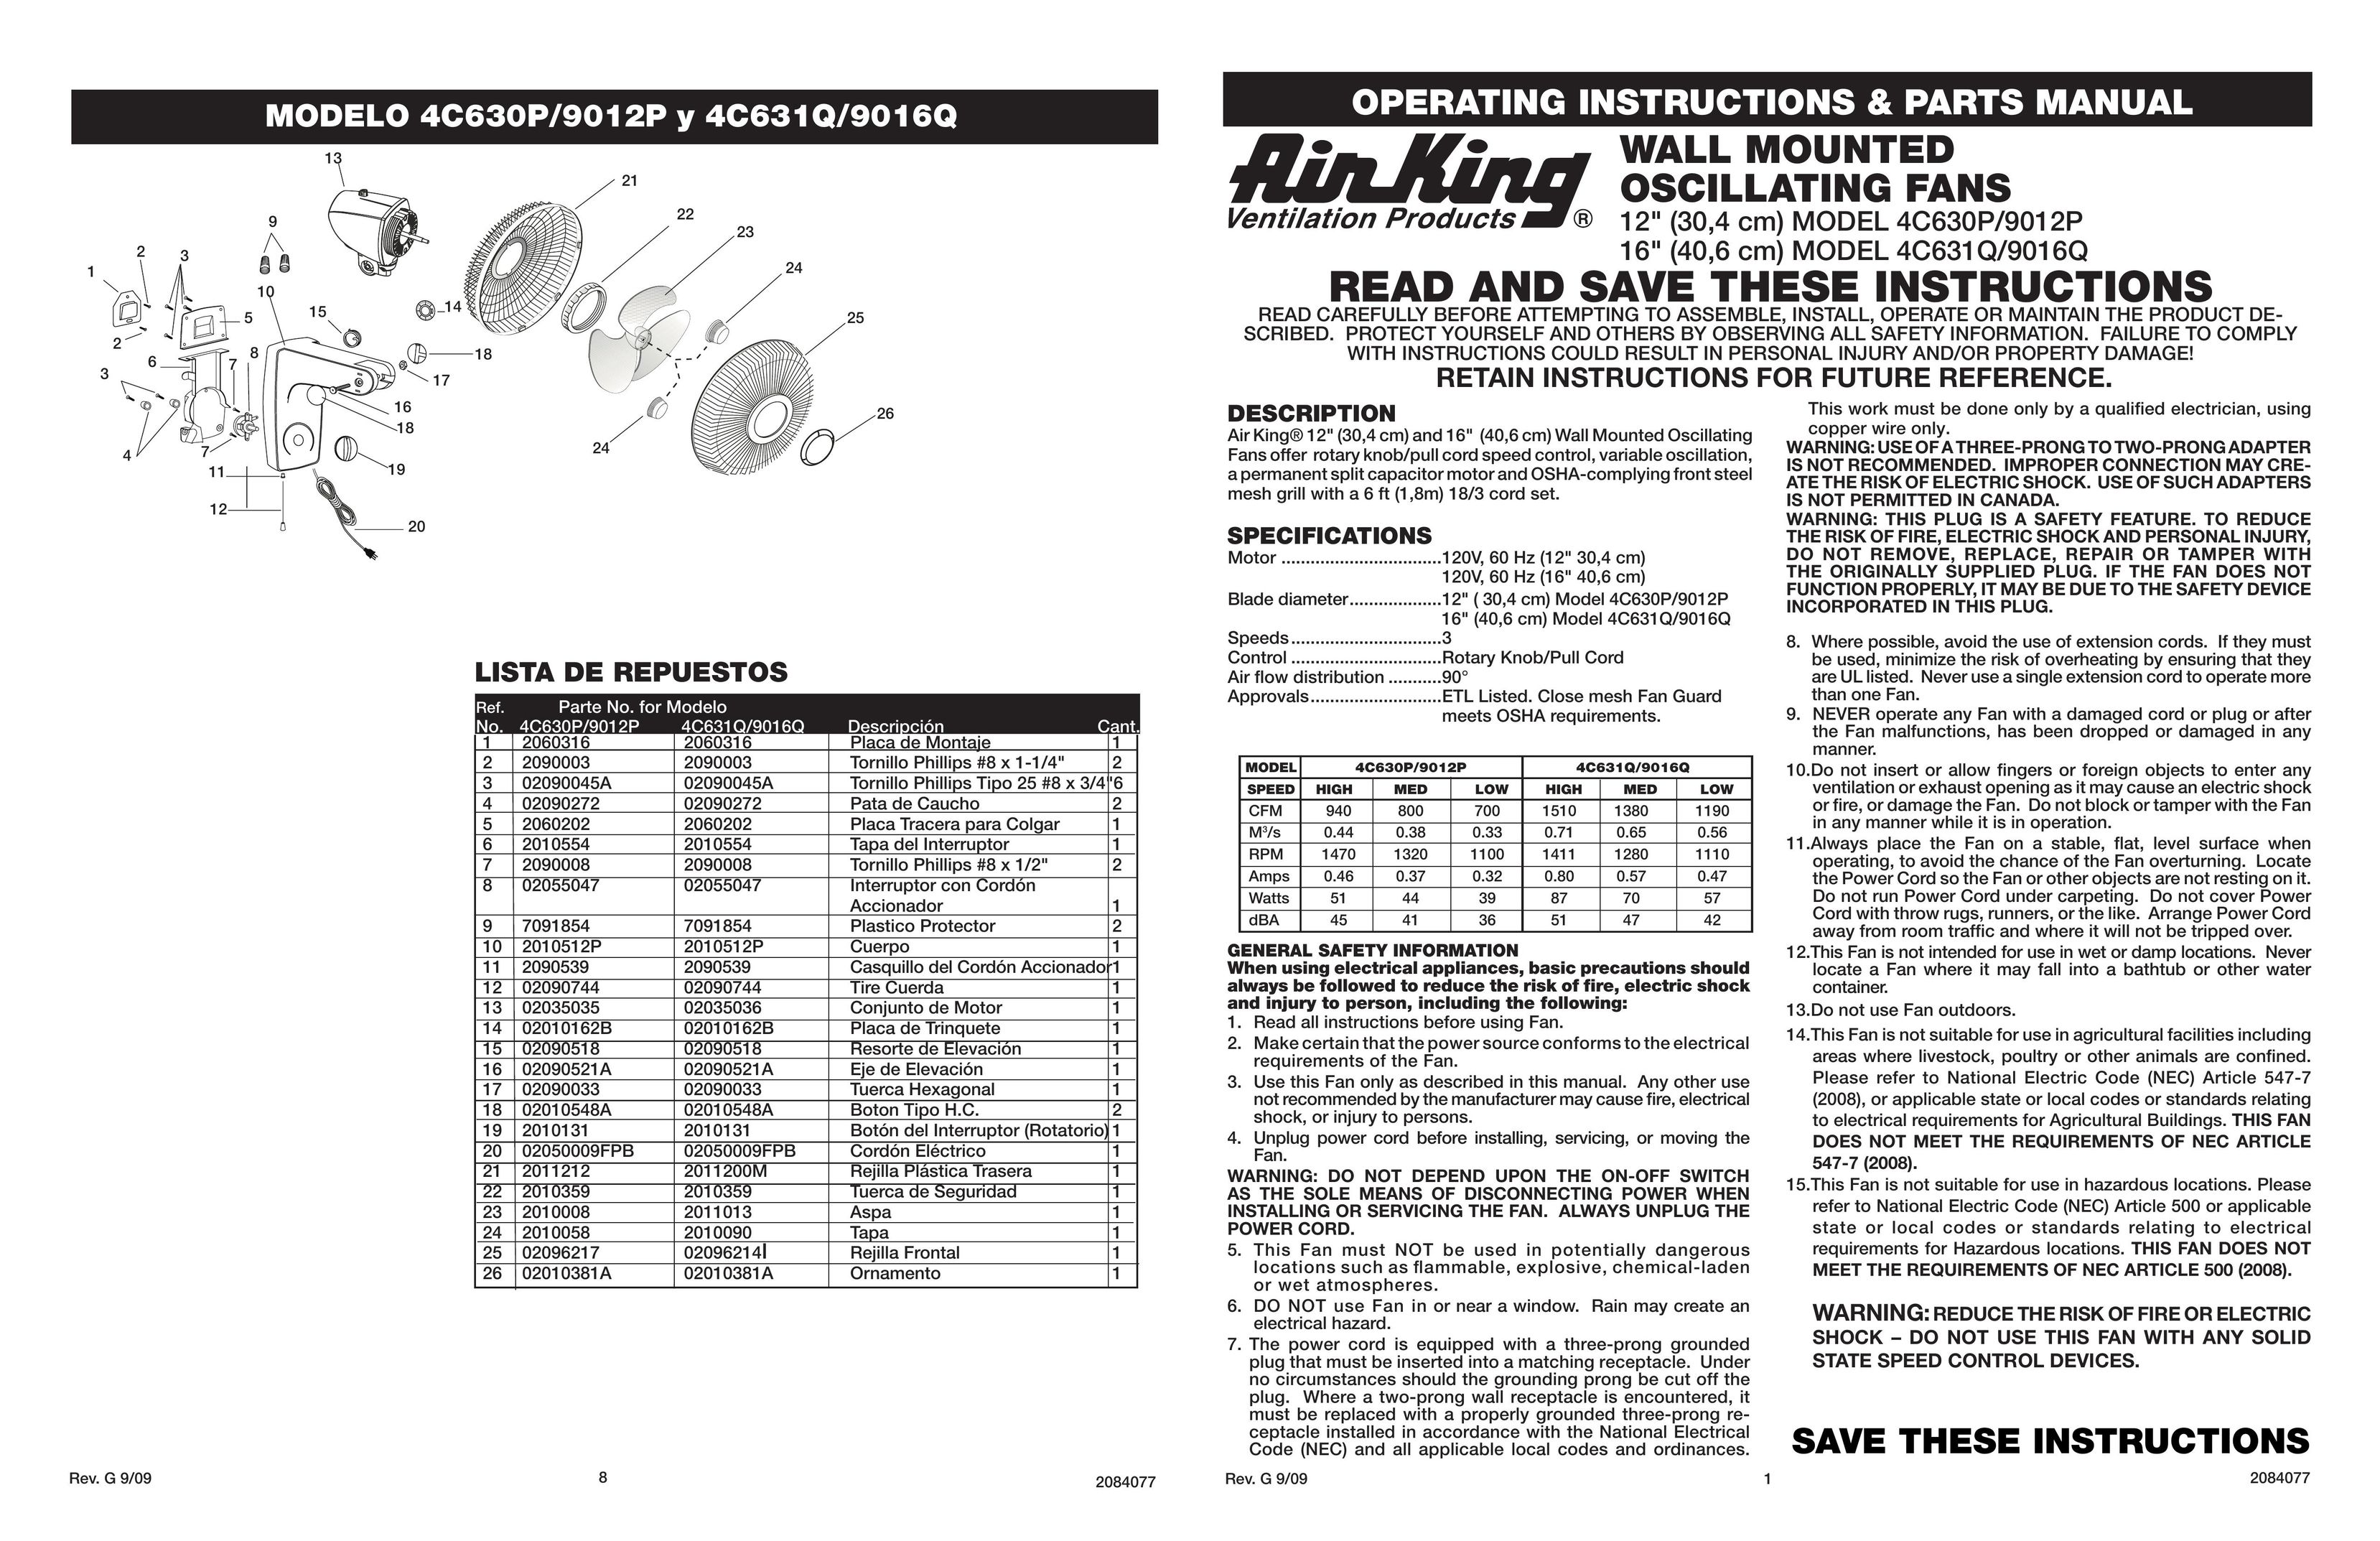 Air King 4C630P/9012P Fan User Manual